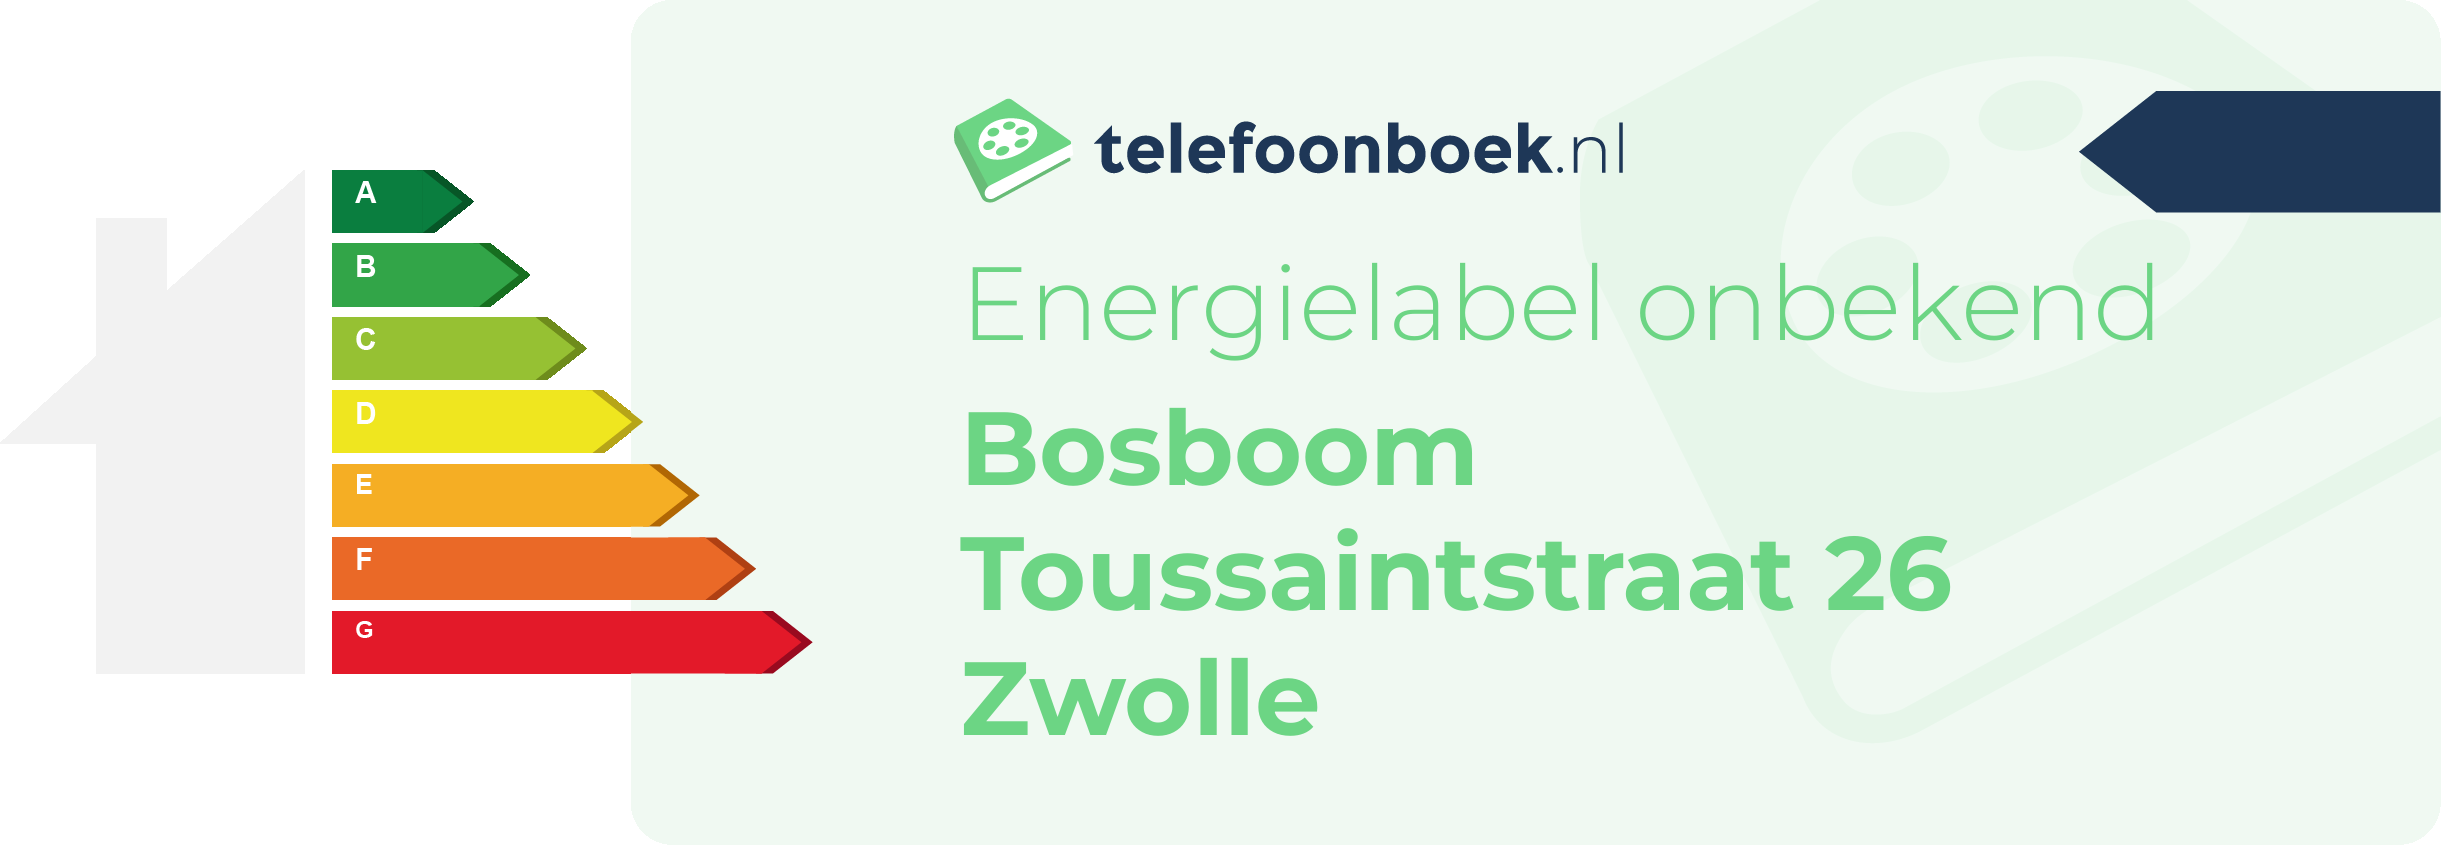 Energielabel Bosboom Toussaintstraat 26 Zwolle